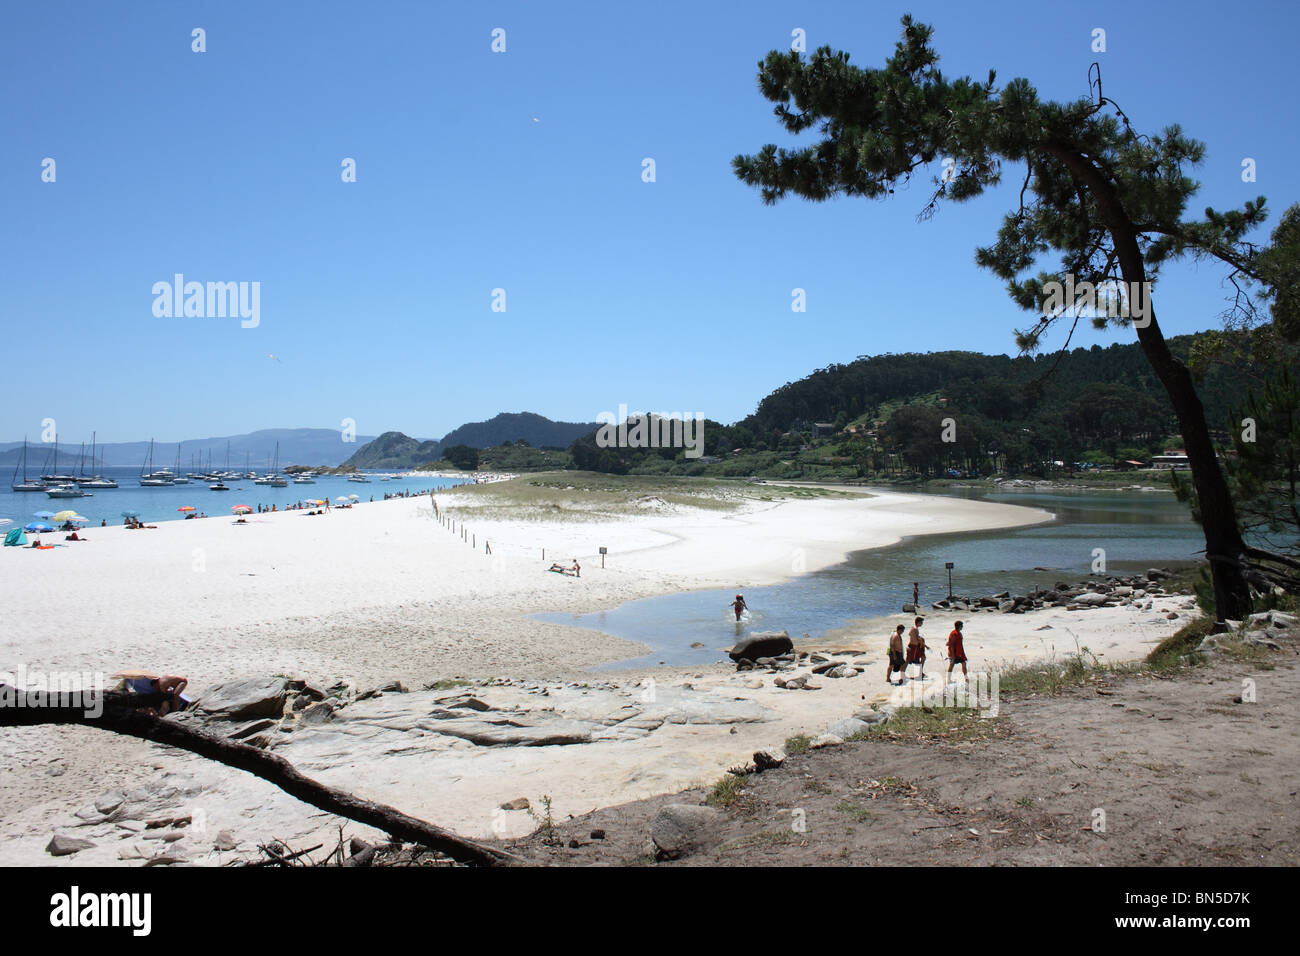 Sand bar, Illa de Faro, Illas Cies, Vigo, Galicia, North Spain, with people on beach and pine tree in foreground Stock Photo